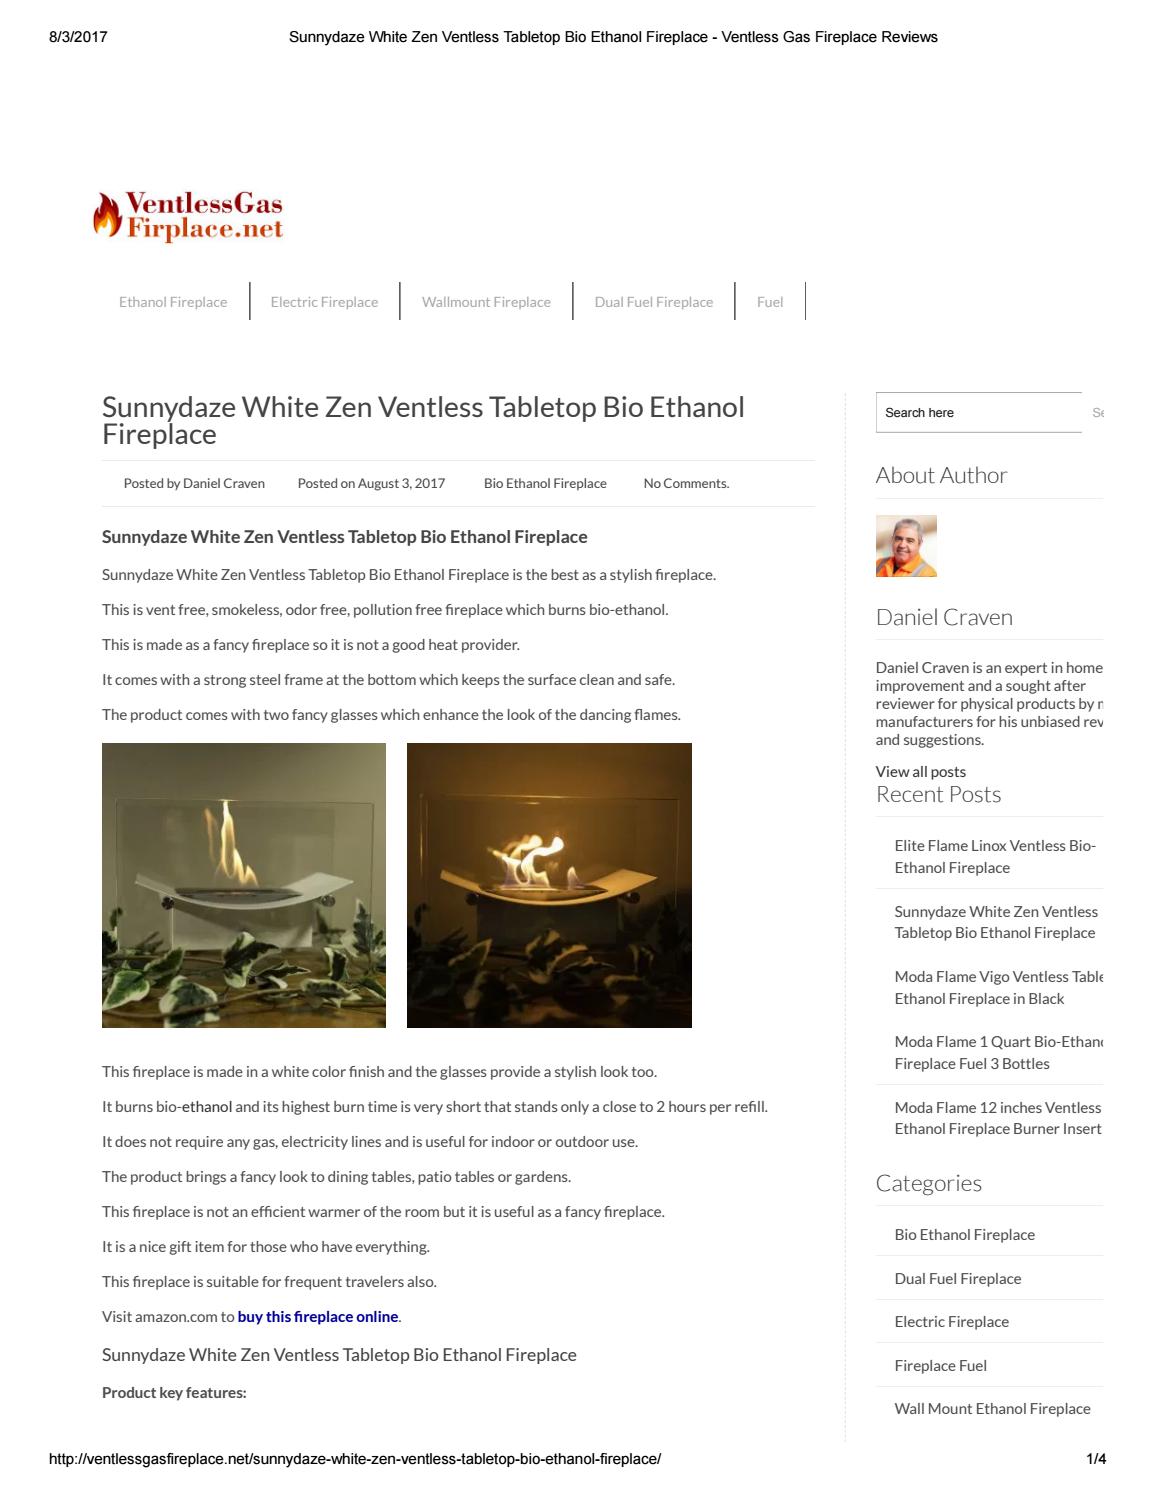 Dual Fuel Fireplace Luxury Sunnydaze White Zen Ventless Tabletop Bio Ethanol Fireplace